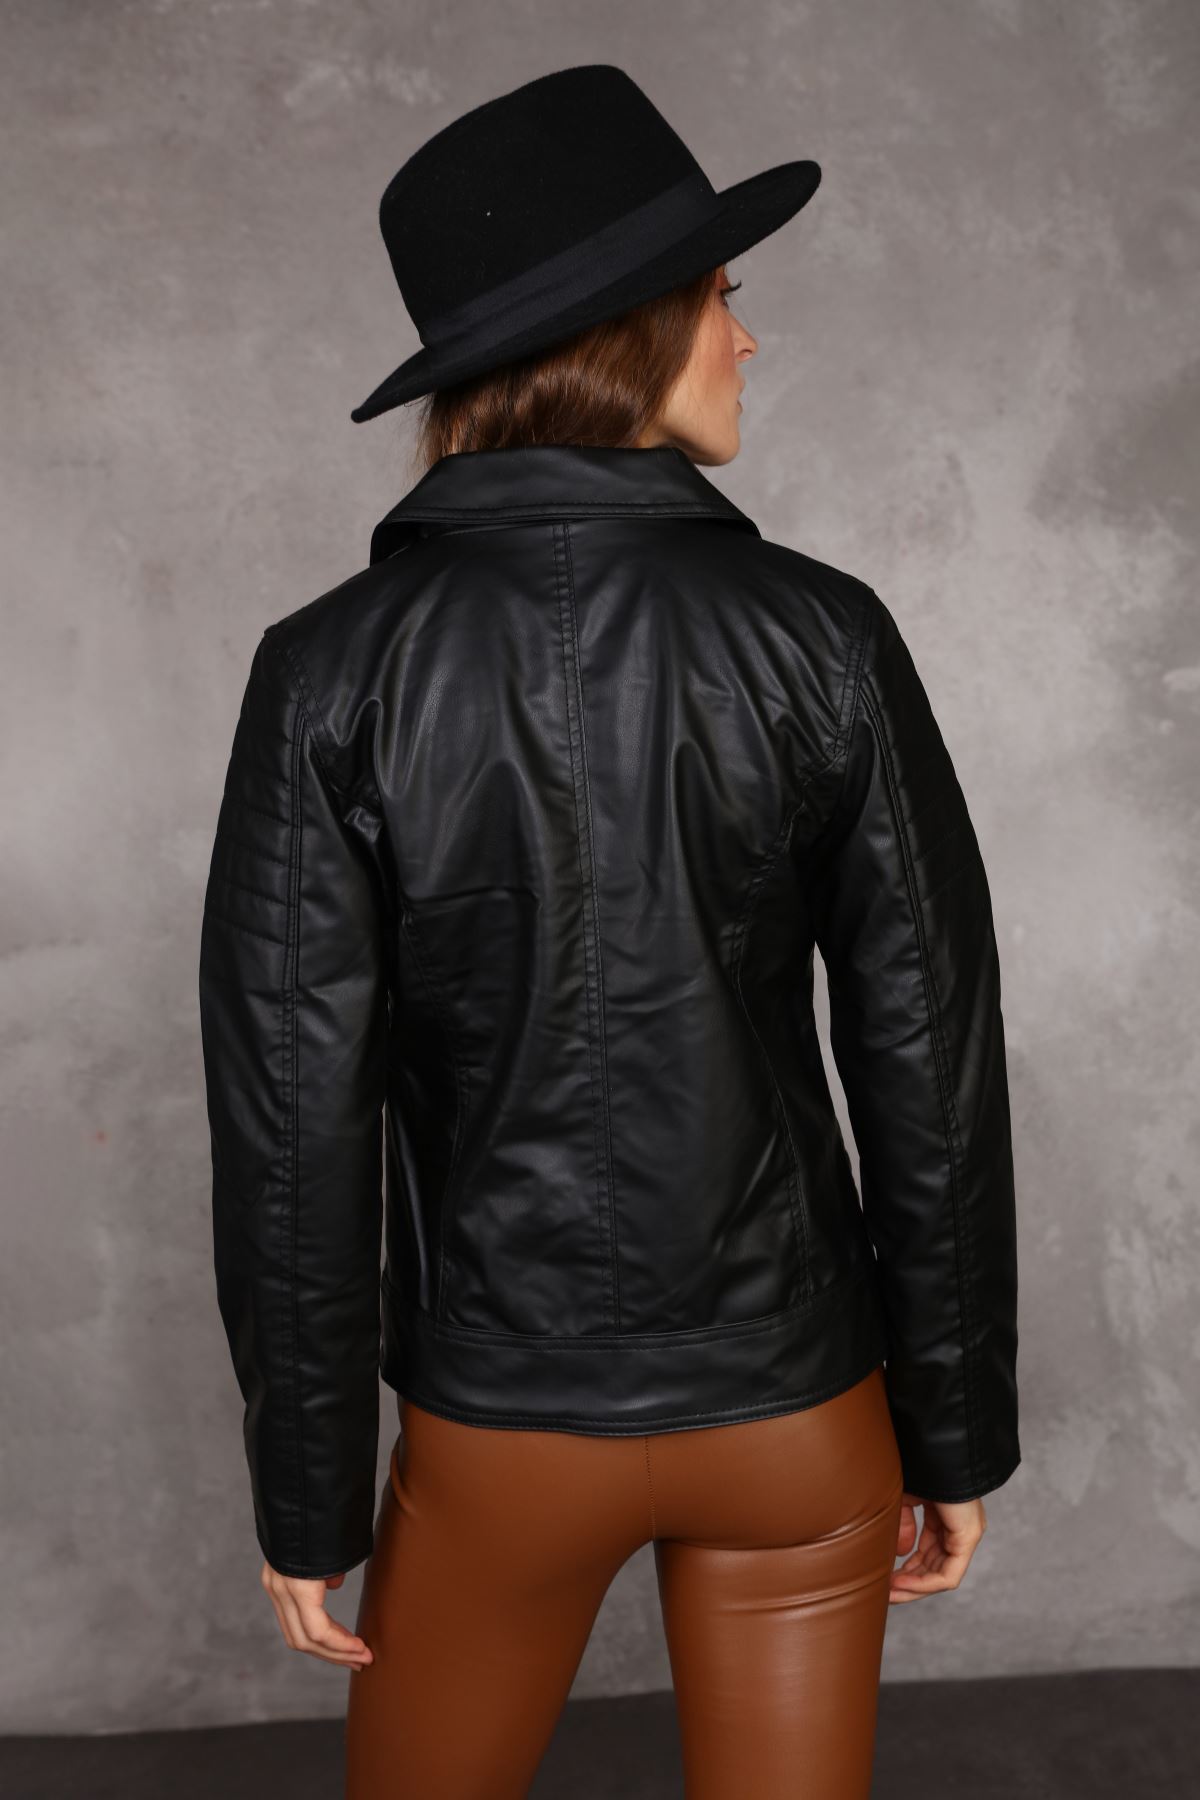 Women's Black Leather Coat with Fleece Inside